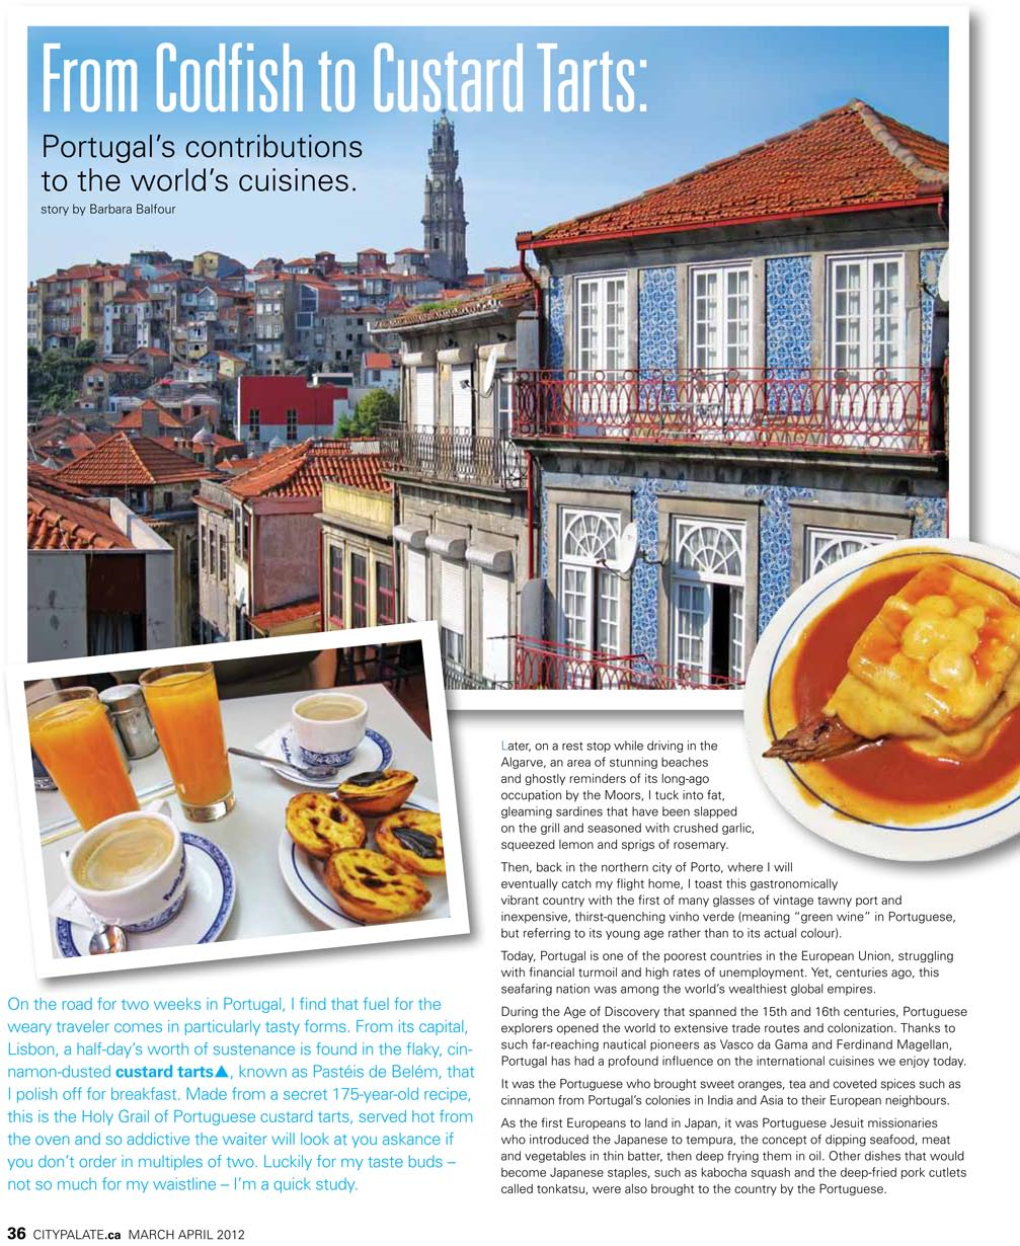 From Codfish to Custard Tarts: Portugal's